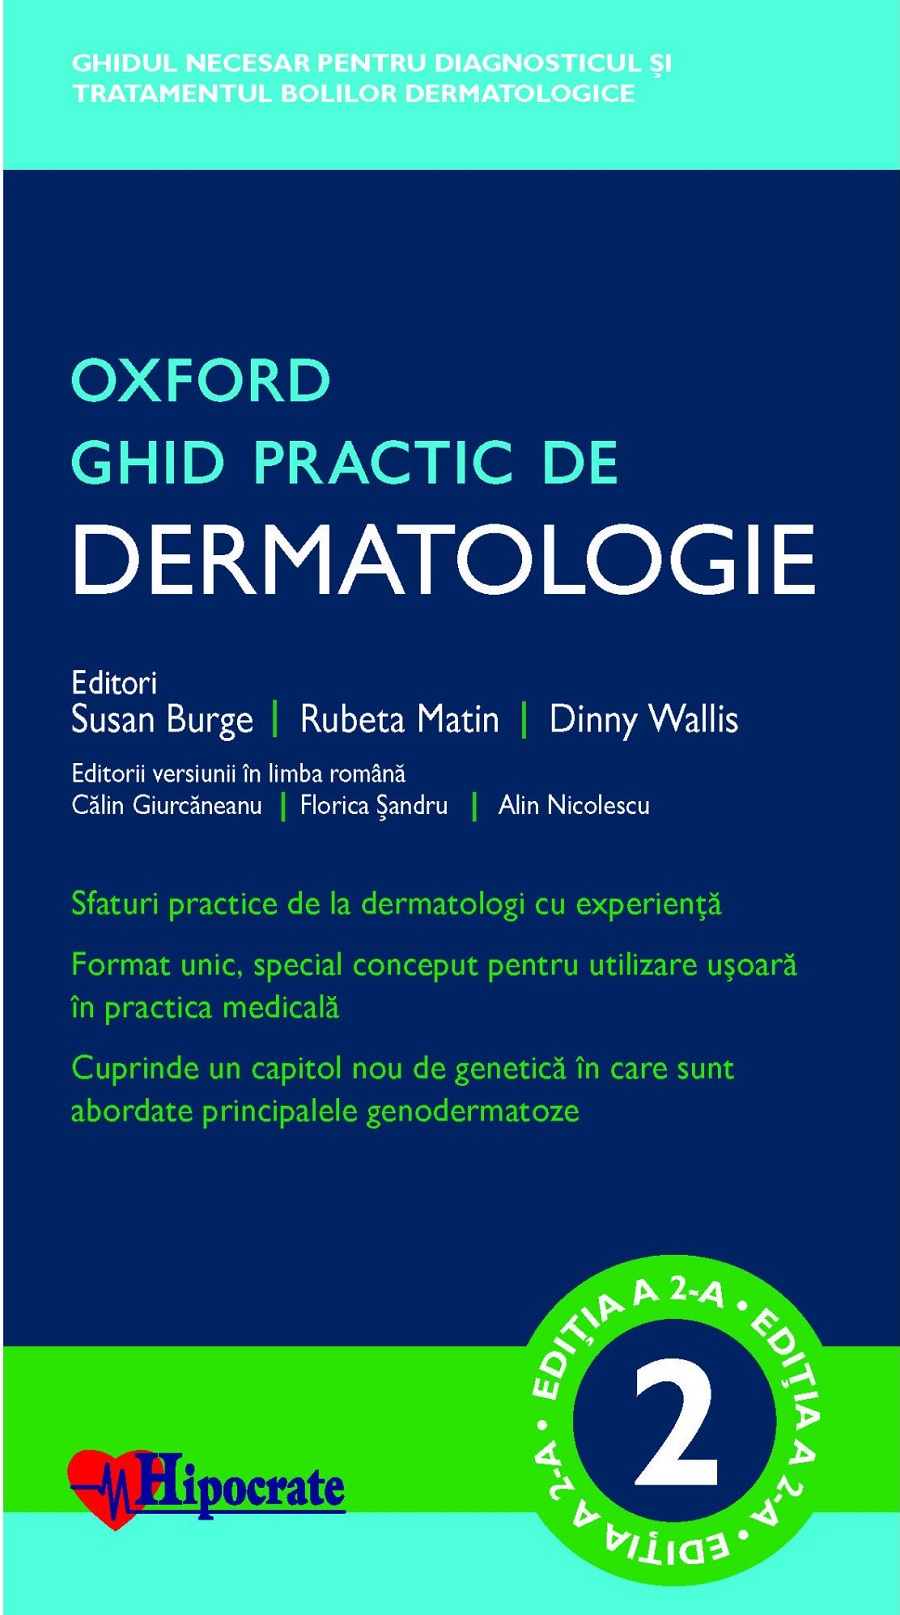 Ghid practic de dermatologie - Oxford